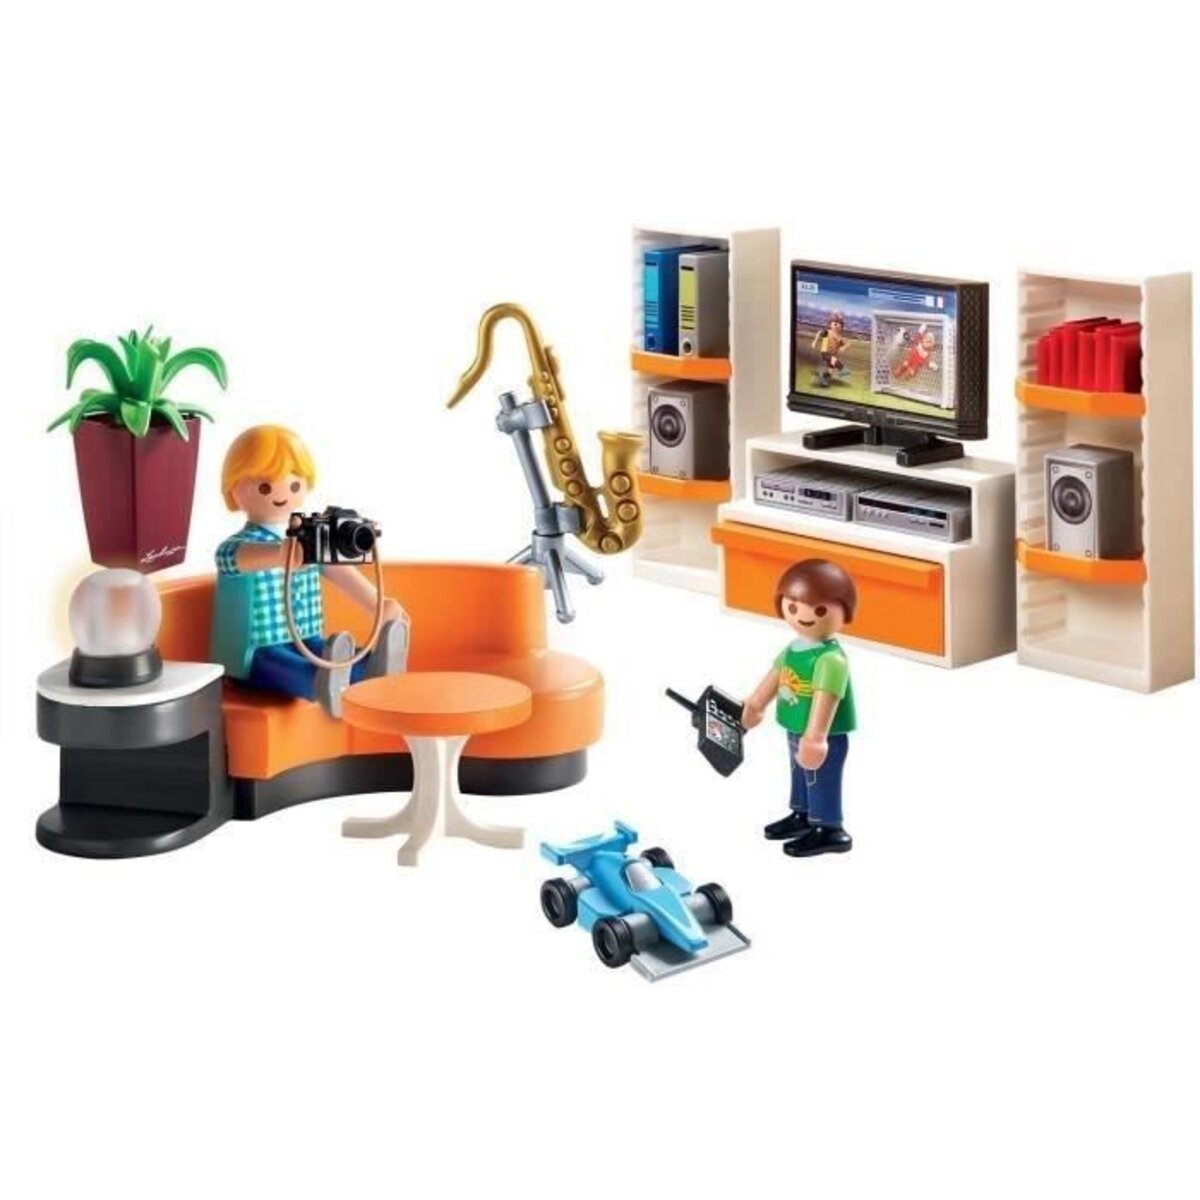 9267 - Playmobil City Life - Salon équipé Playmobil Playmobil : King Jouet, Playmobil  Playmobil - Jeux d'imitation & Mondes imaginaires